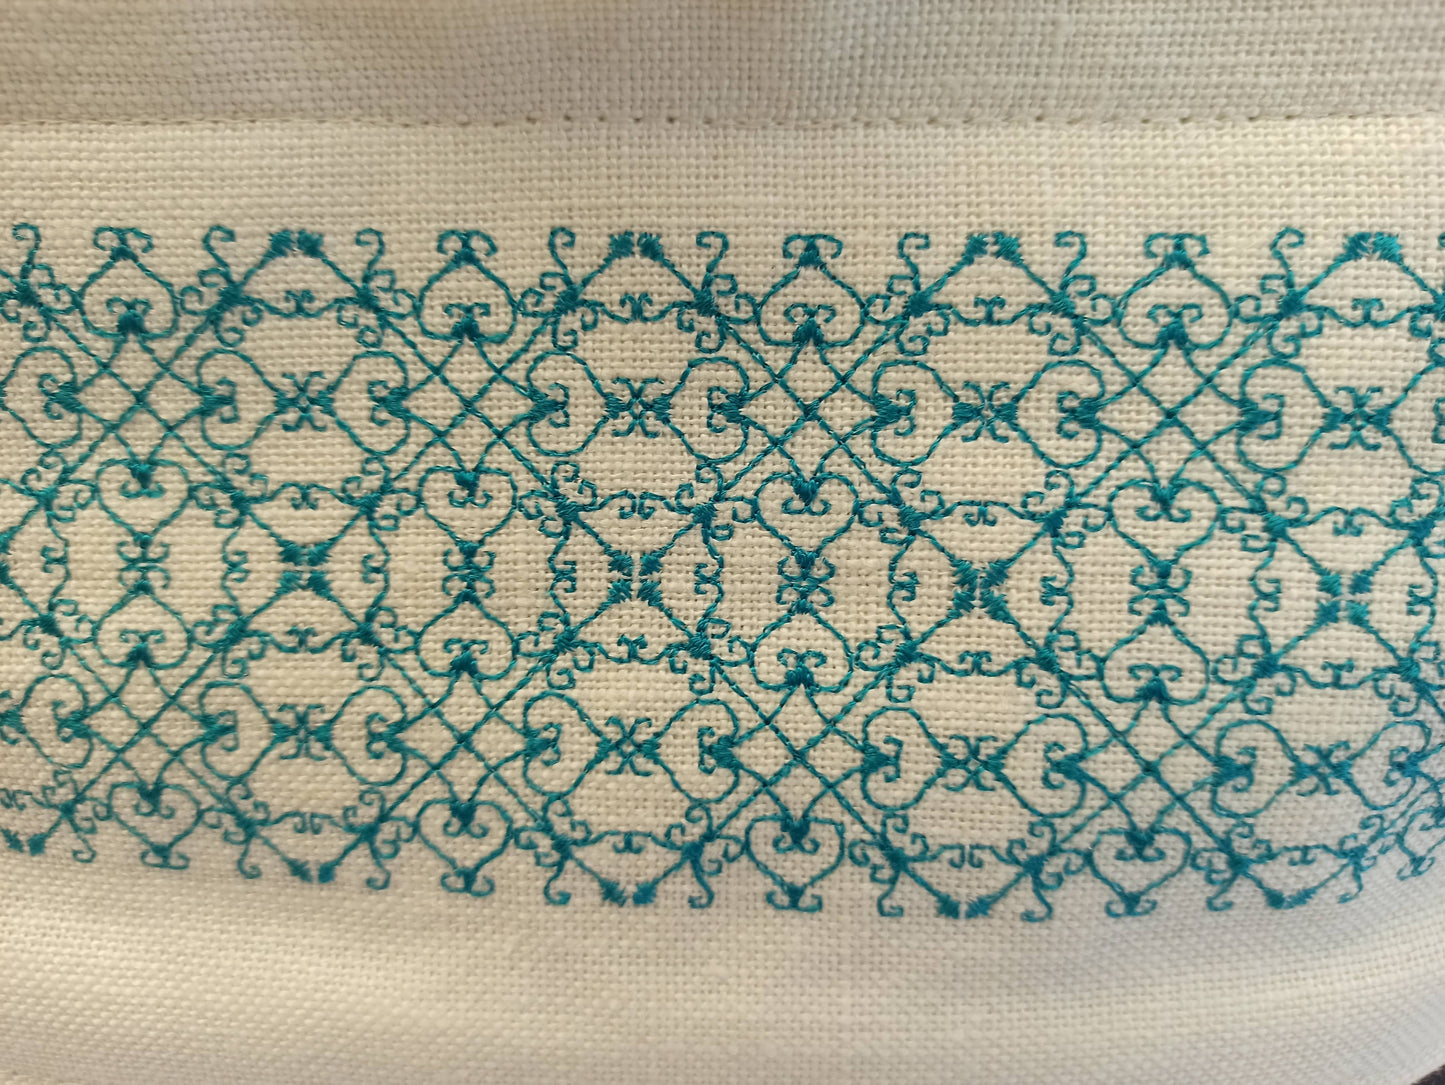 Shoulder Bag Renda Portuguesa - Embroidery Details